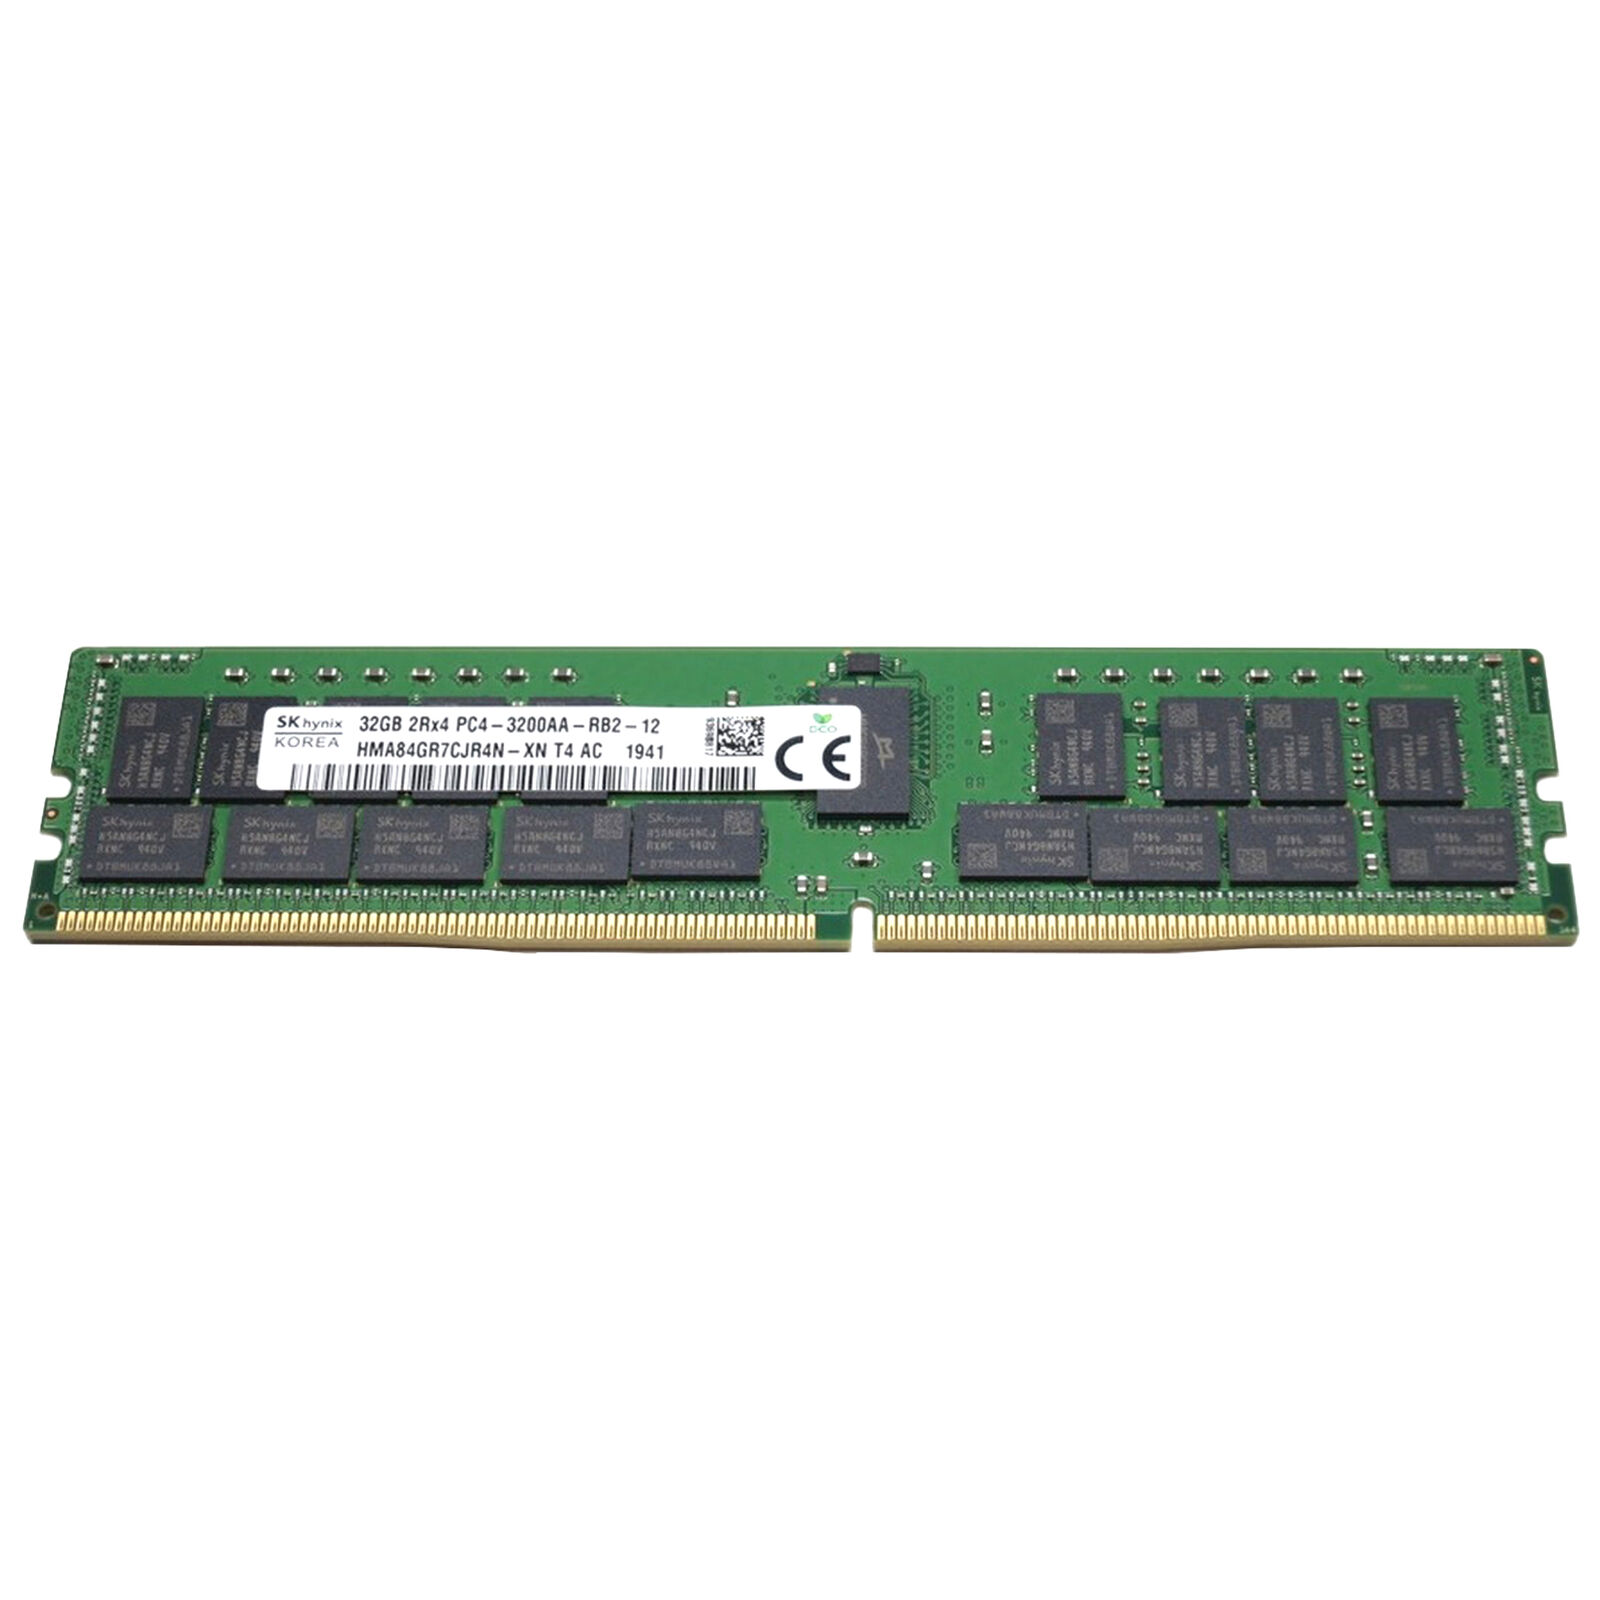 Sk Hynix 128GB (4x 32GB) 3200MHz DDR4 RDIMM PC4-25600 1.2V 2Rx4 Server Memory